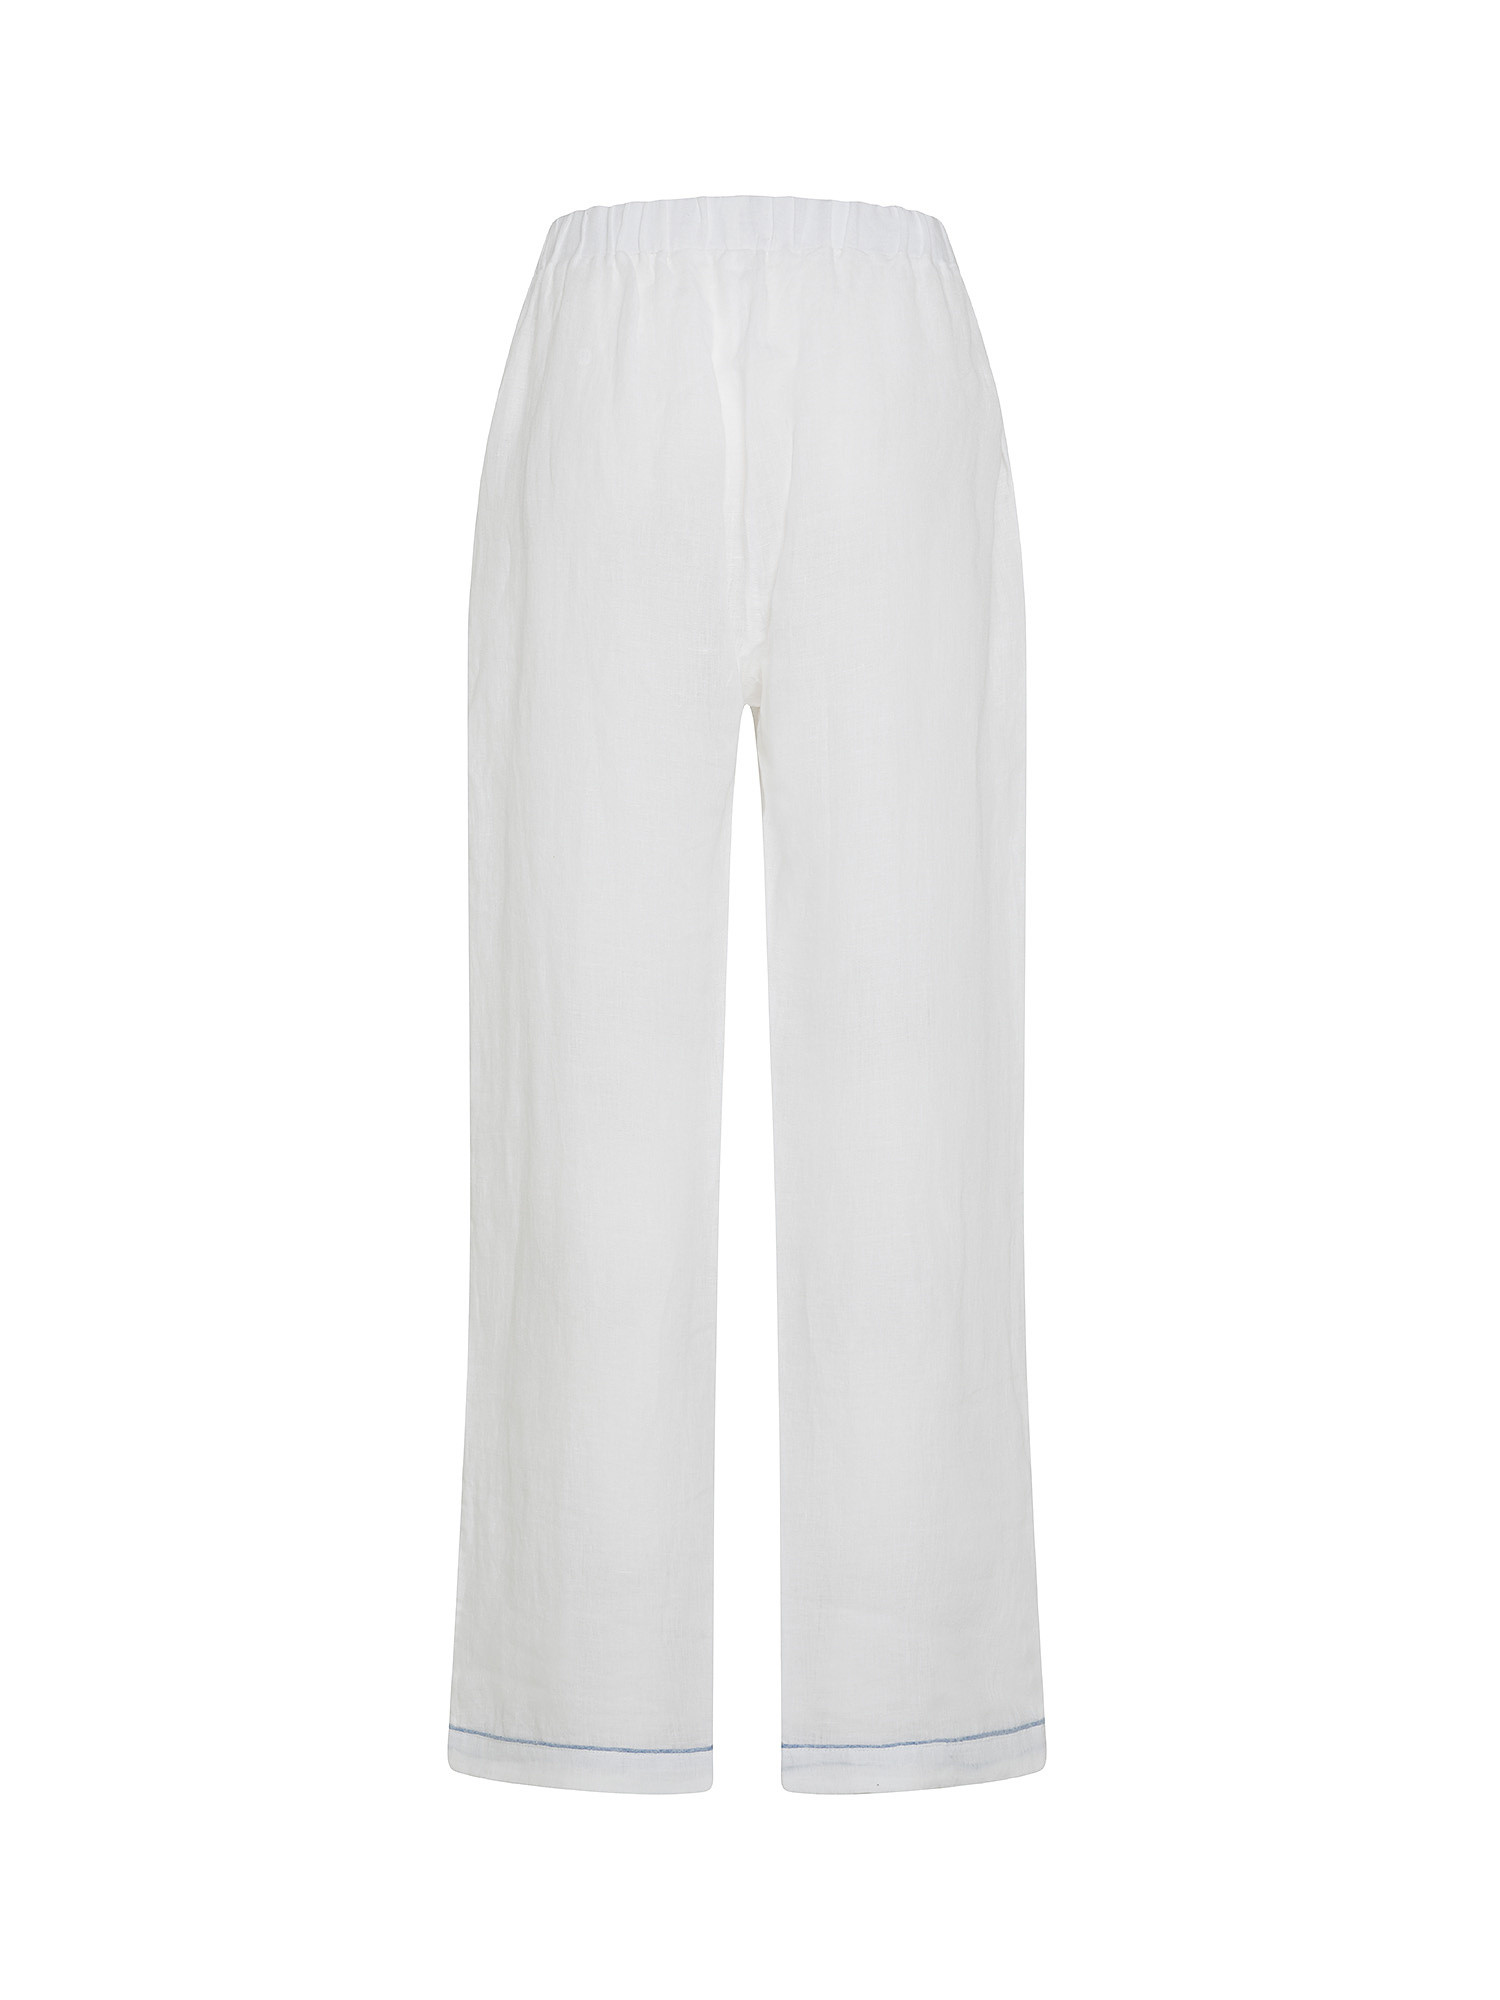 Pantalone pigiama puro lino tinta unita, Bianco, large image number 1